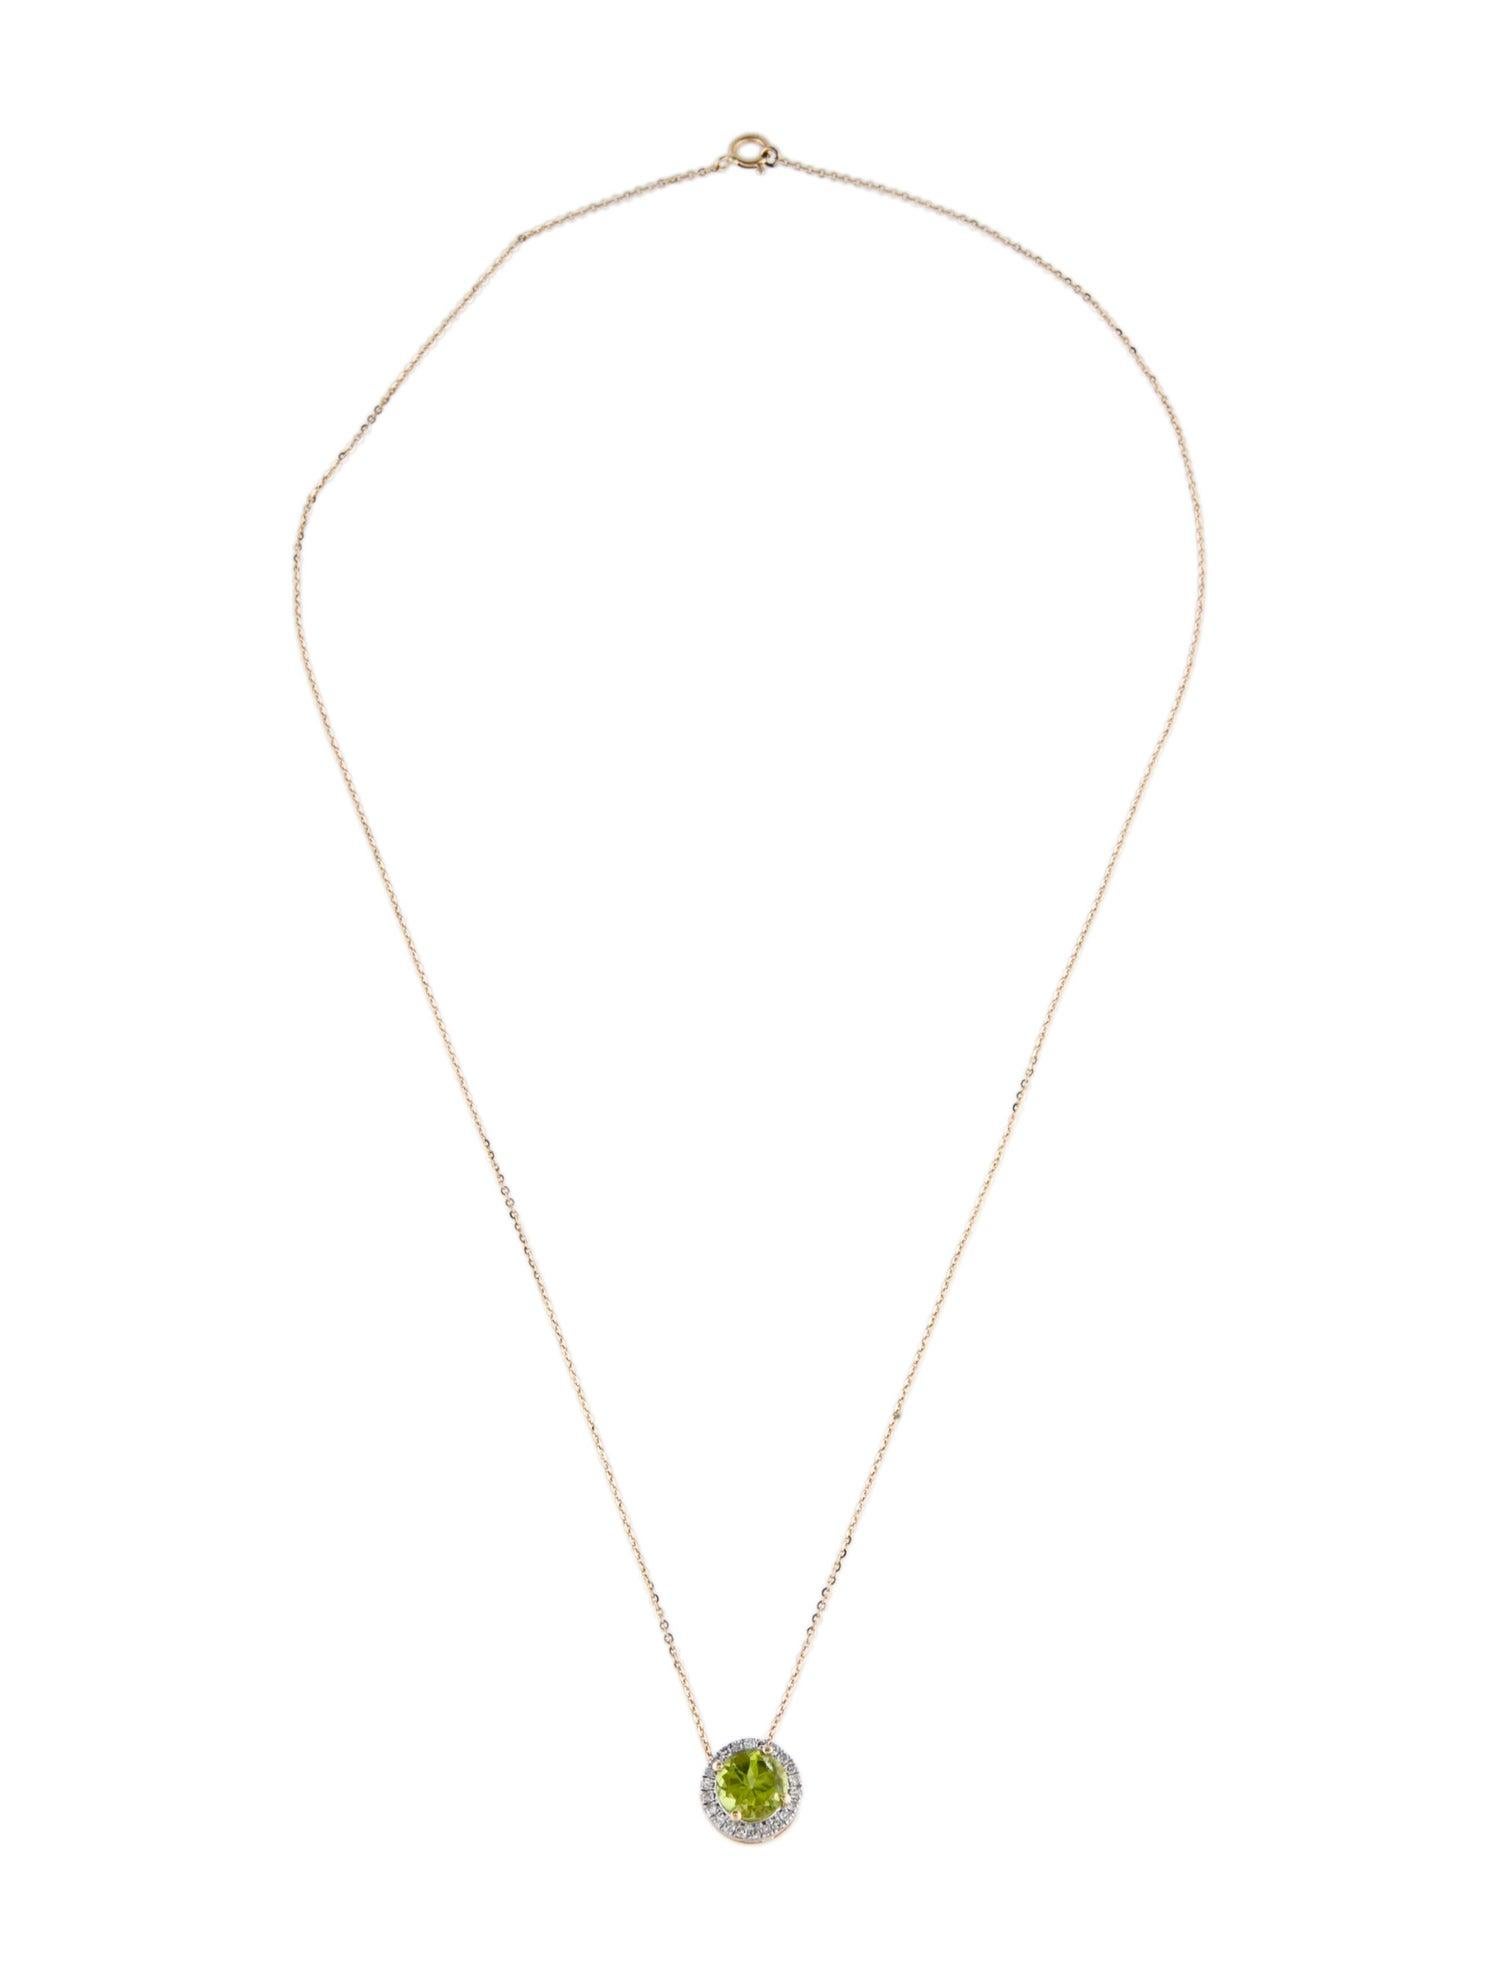 Brilliant Cut 14K 1.64ctw Peridot & Diamond Pendant Necklace - Elegant Statement Jewelry For Sale